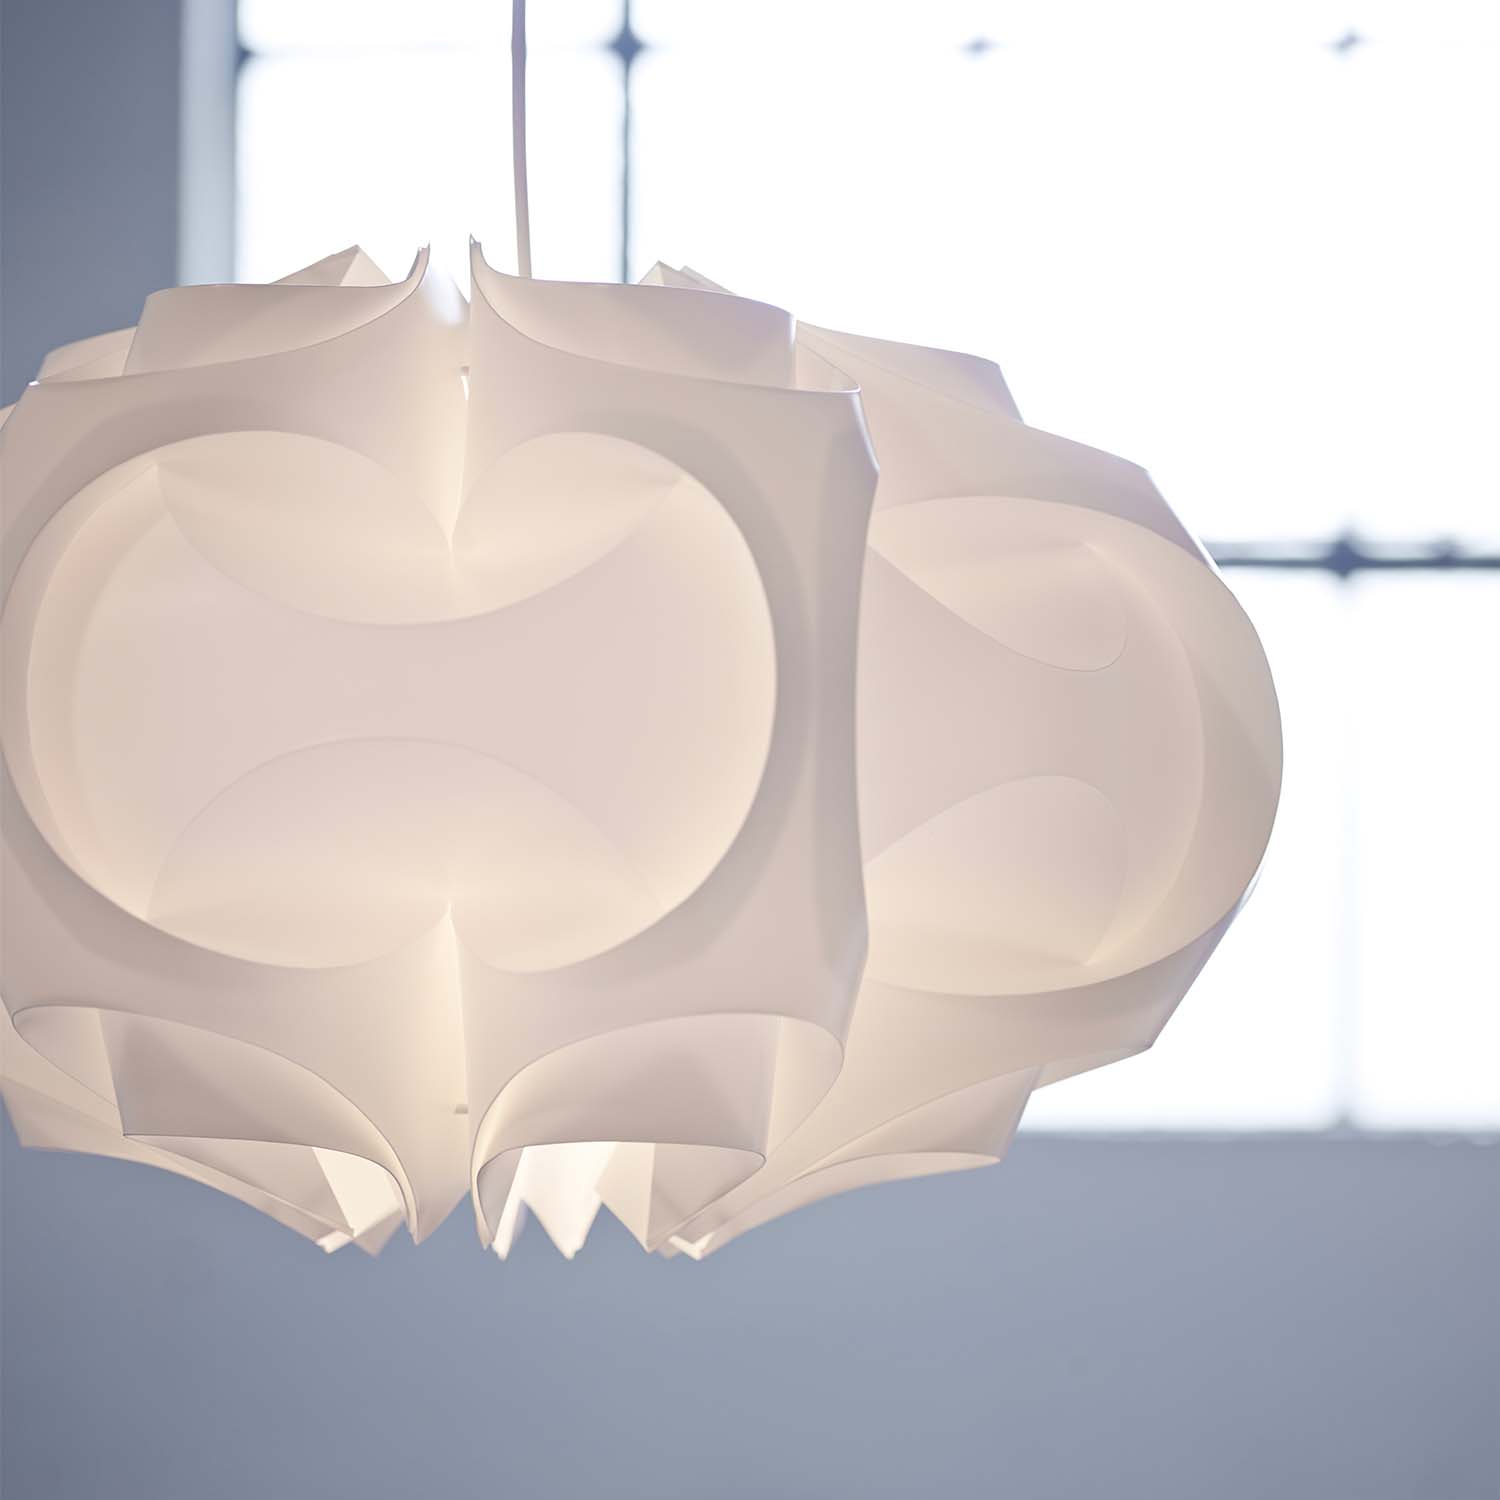 LE KLINT 171 - Round designer acrylic pendant light